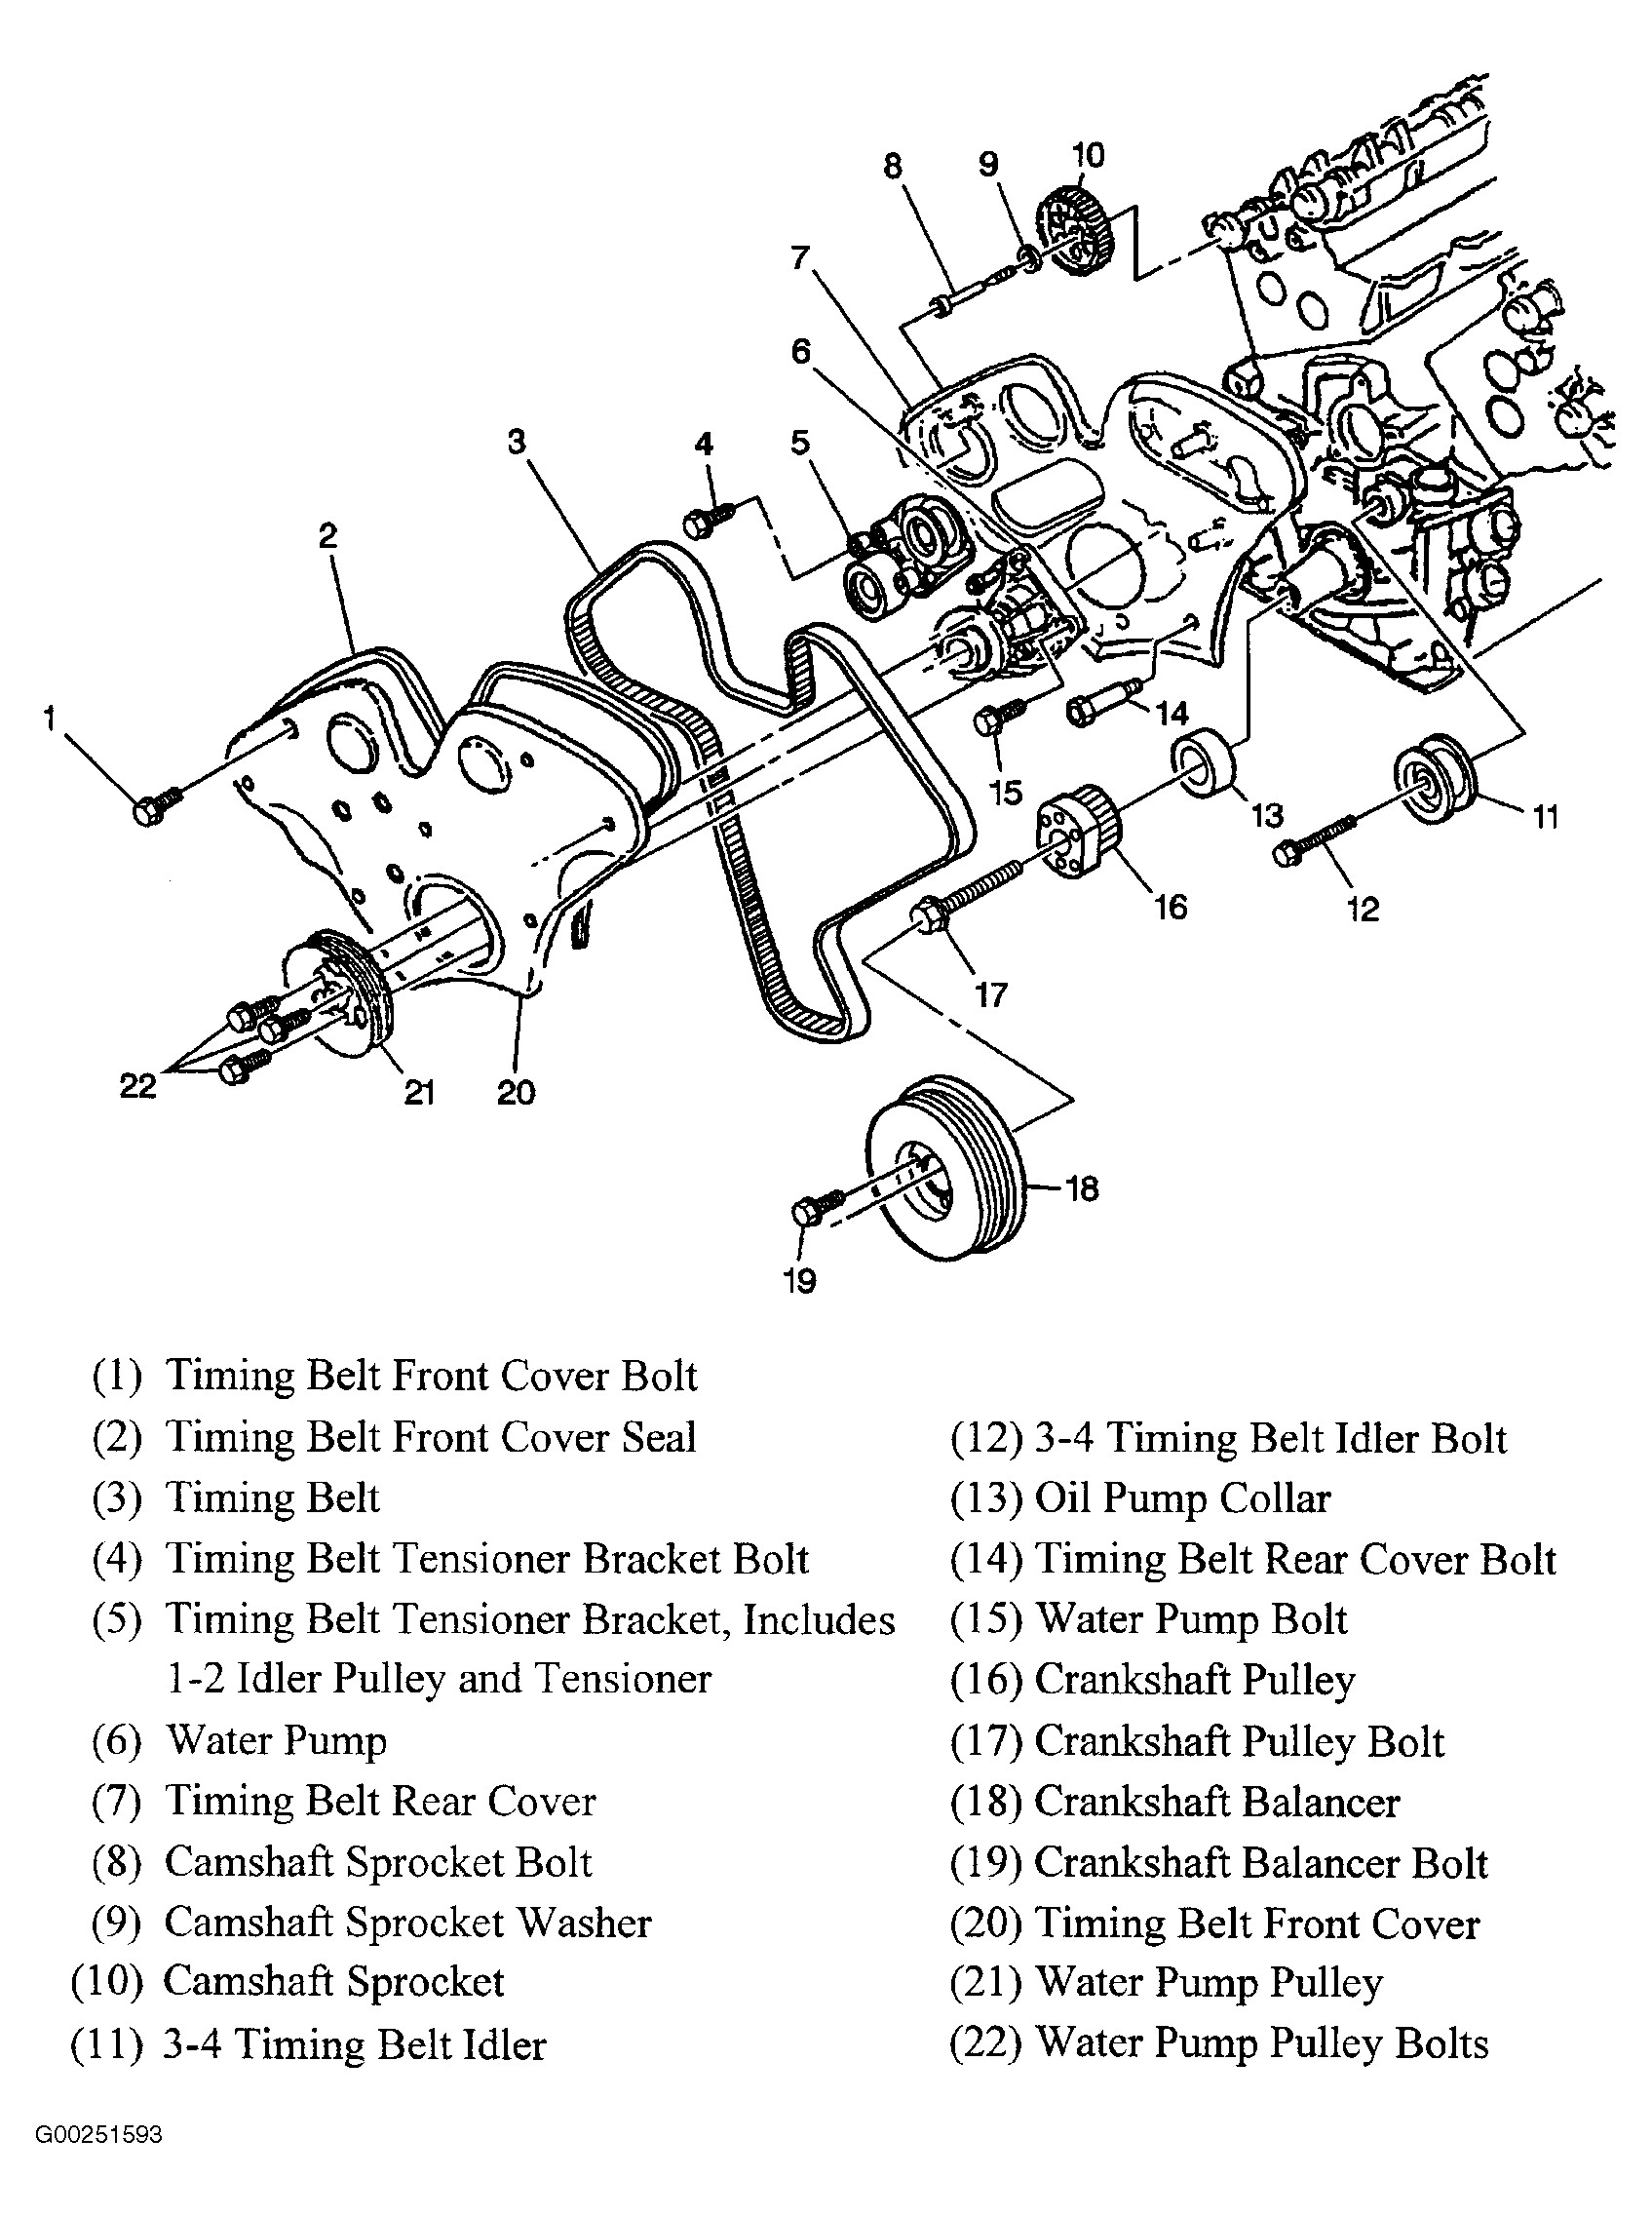 Car Engine Parts with Diagram 2003 Cadillac Cts Serpentine Belt Diagram Auto Of Car Engine Parts with Diagram